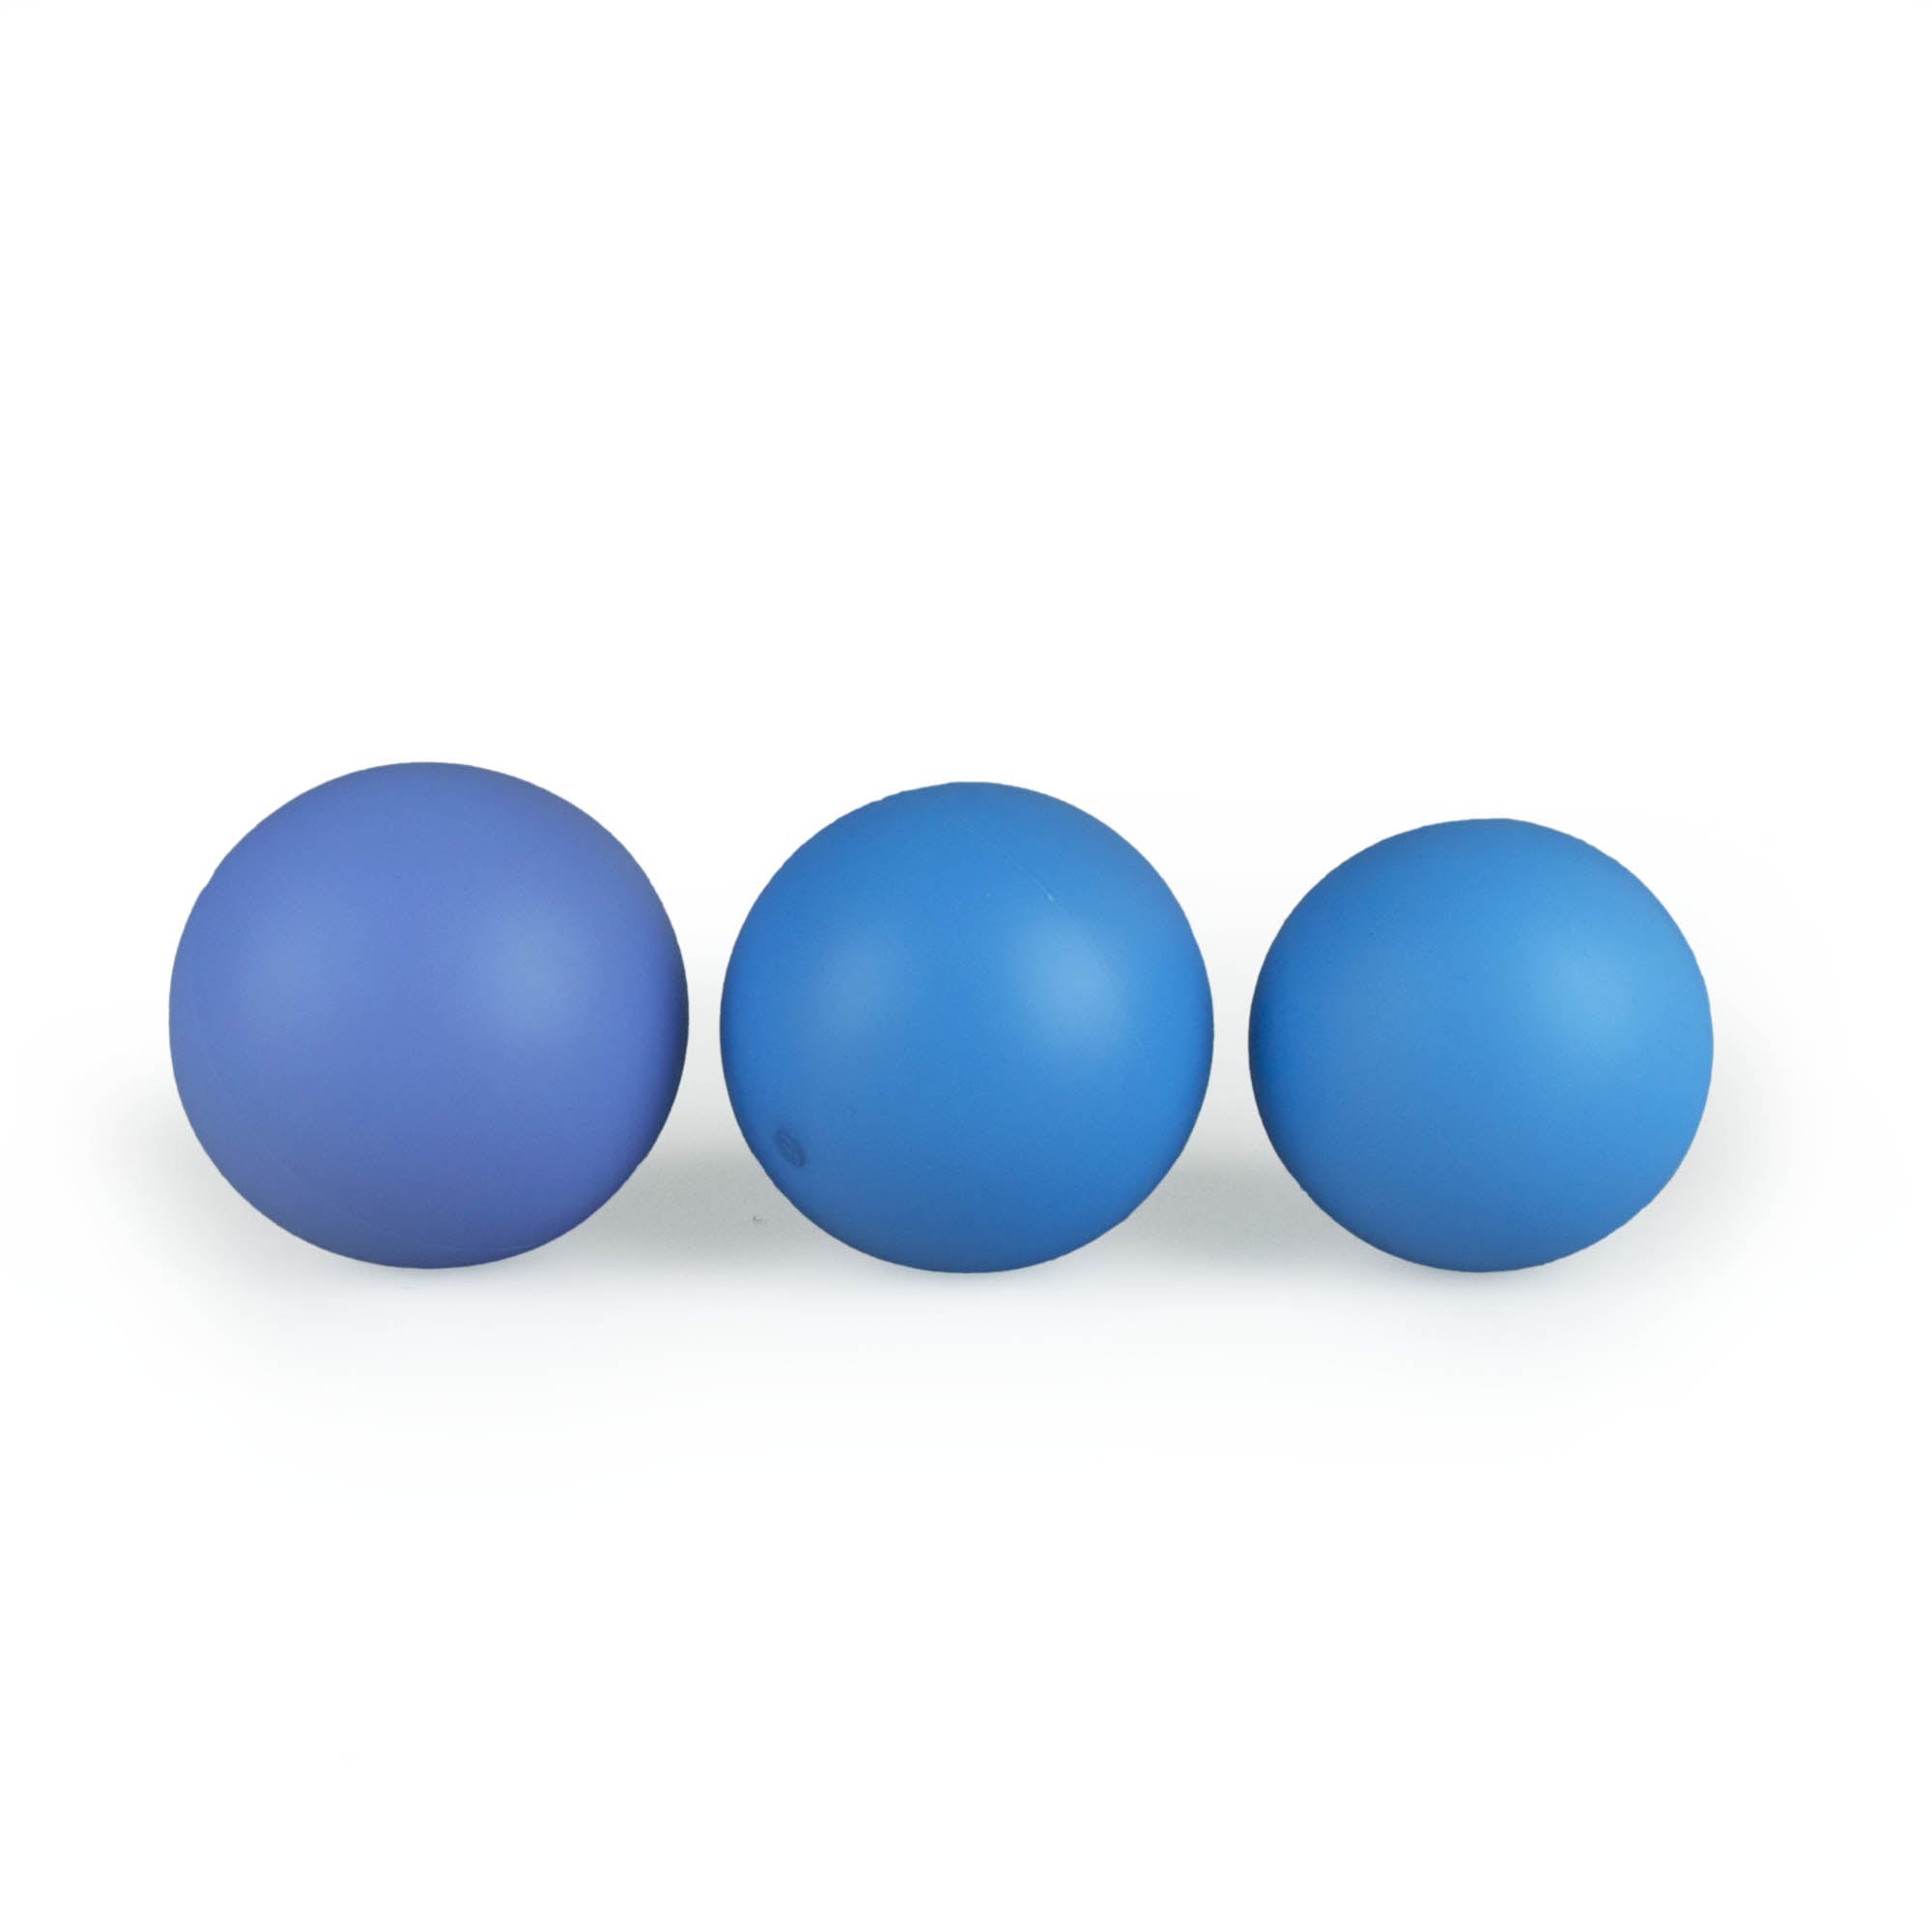 MMX juggling ball comparison shot in blue